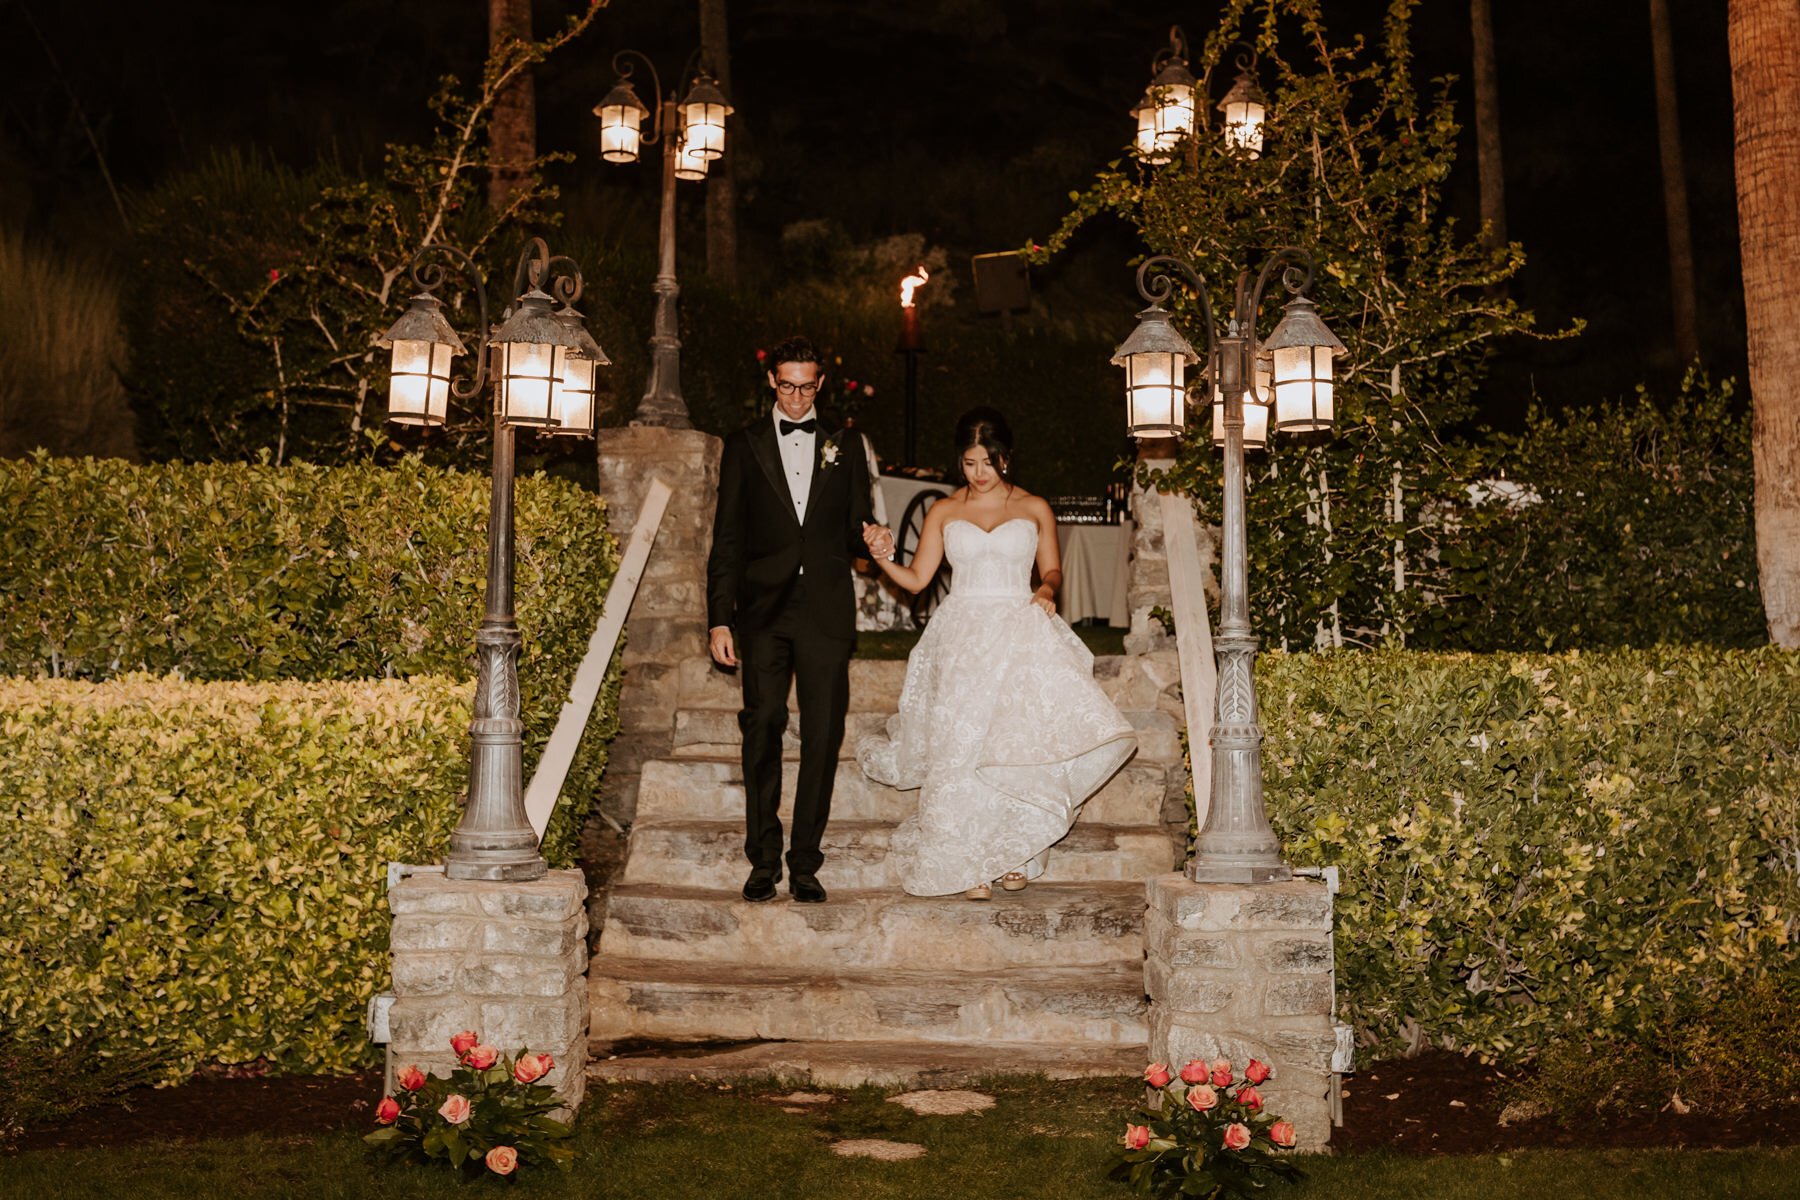 Bride and Groom reception grand entrance, Spencer’s Restaurant Wedding Palm Springs, Tida Svy Photo